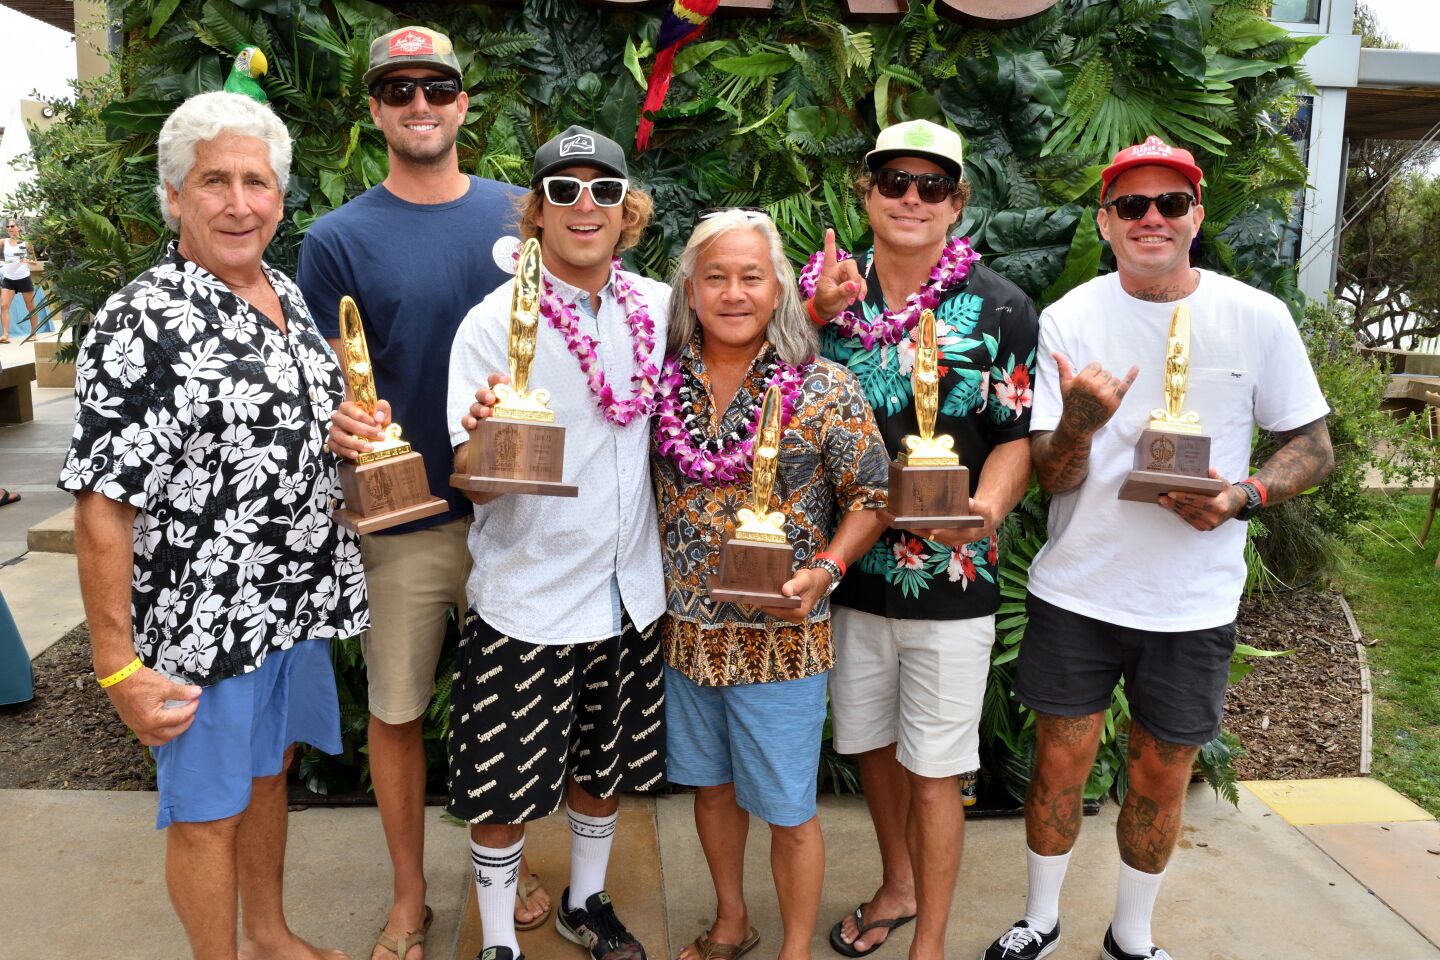 Victory in the Legends of Surfing Invitational contest went to Scorpion Bay/Team Borrelli: Fred Borrelli, Mason Derieux, Jacob Szekely, surf veteran Guy Takayama, Josh Hall and Felipe Becerra.